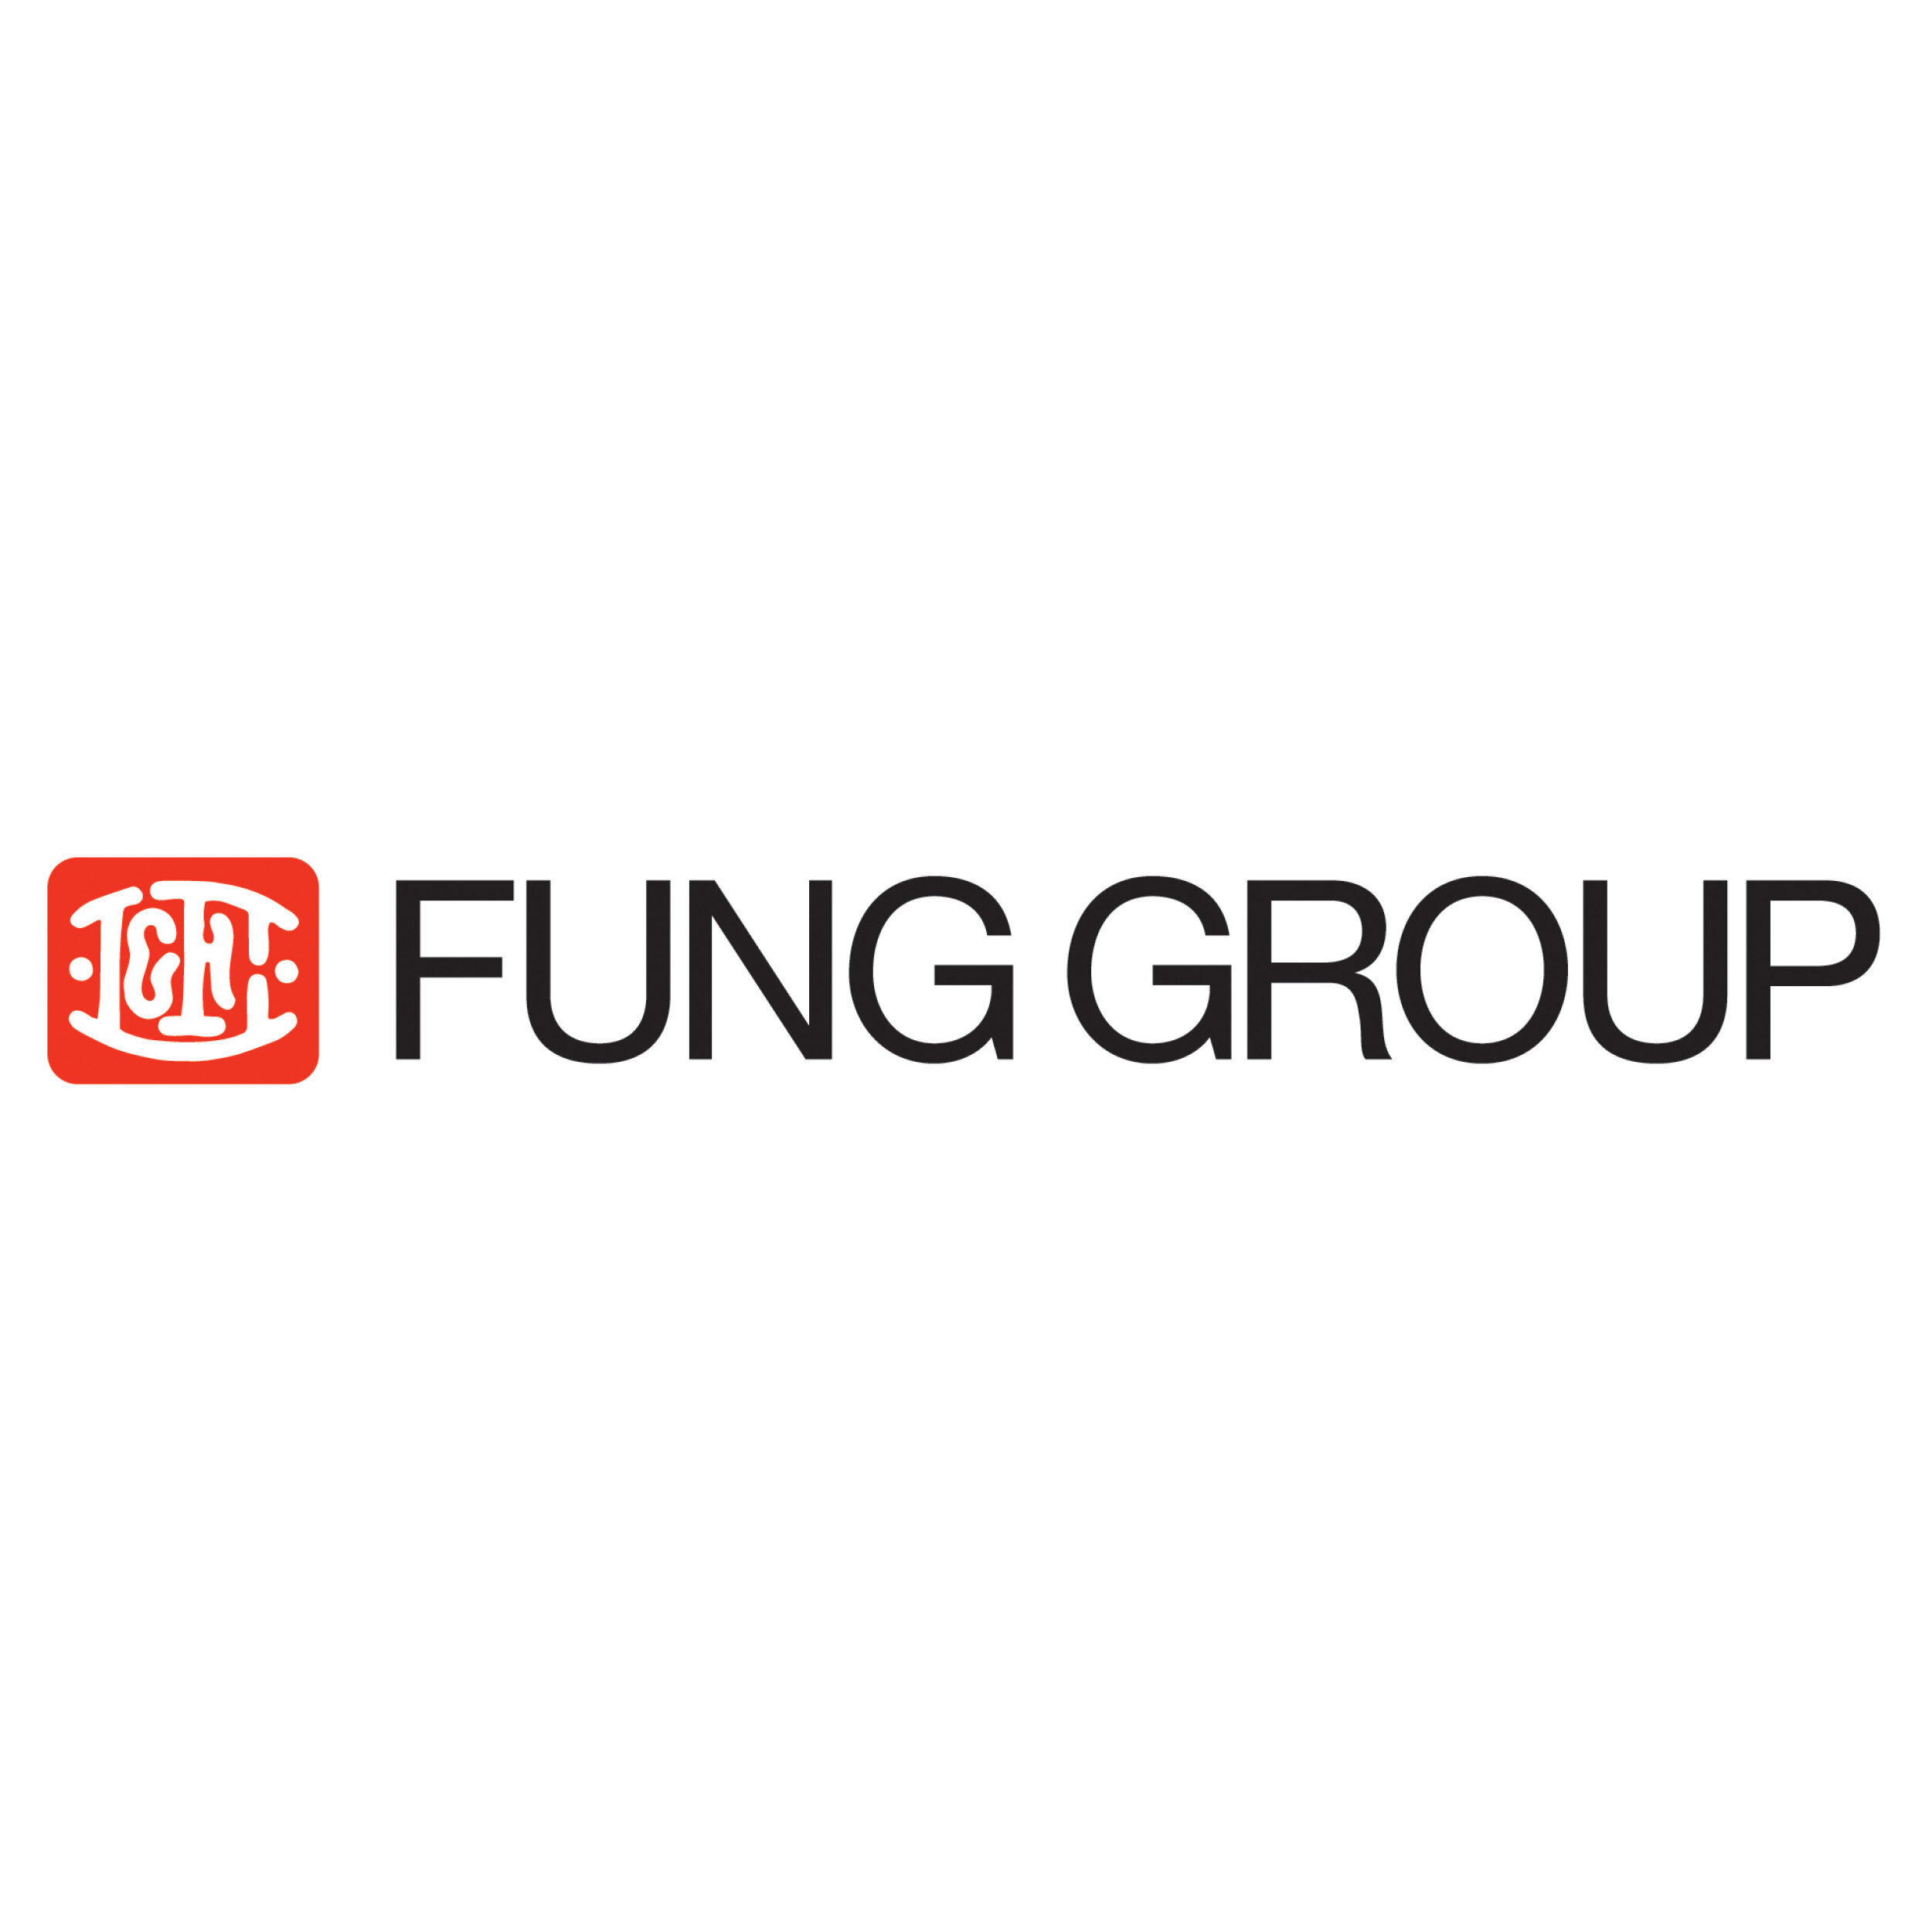 1 Fung Group.jpg